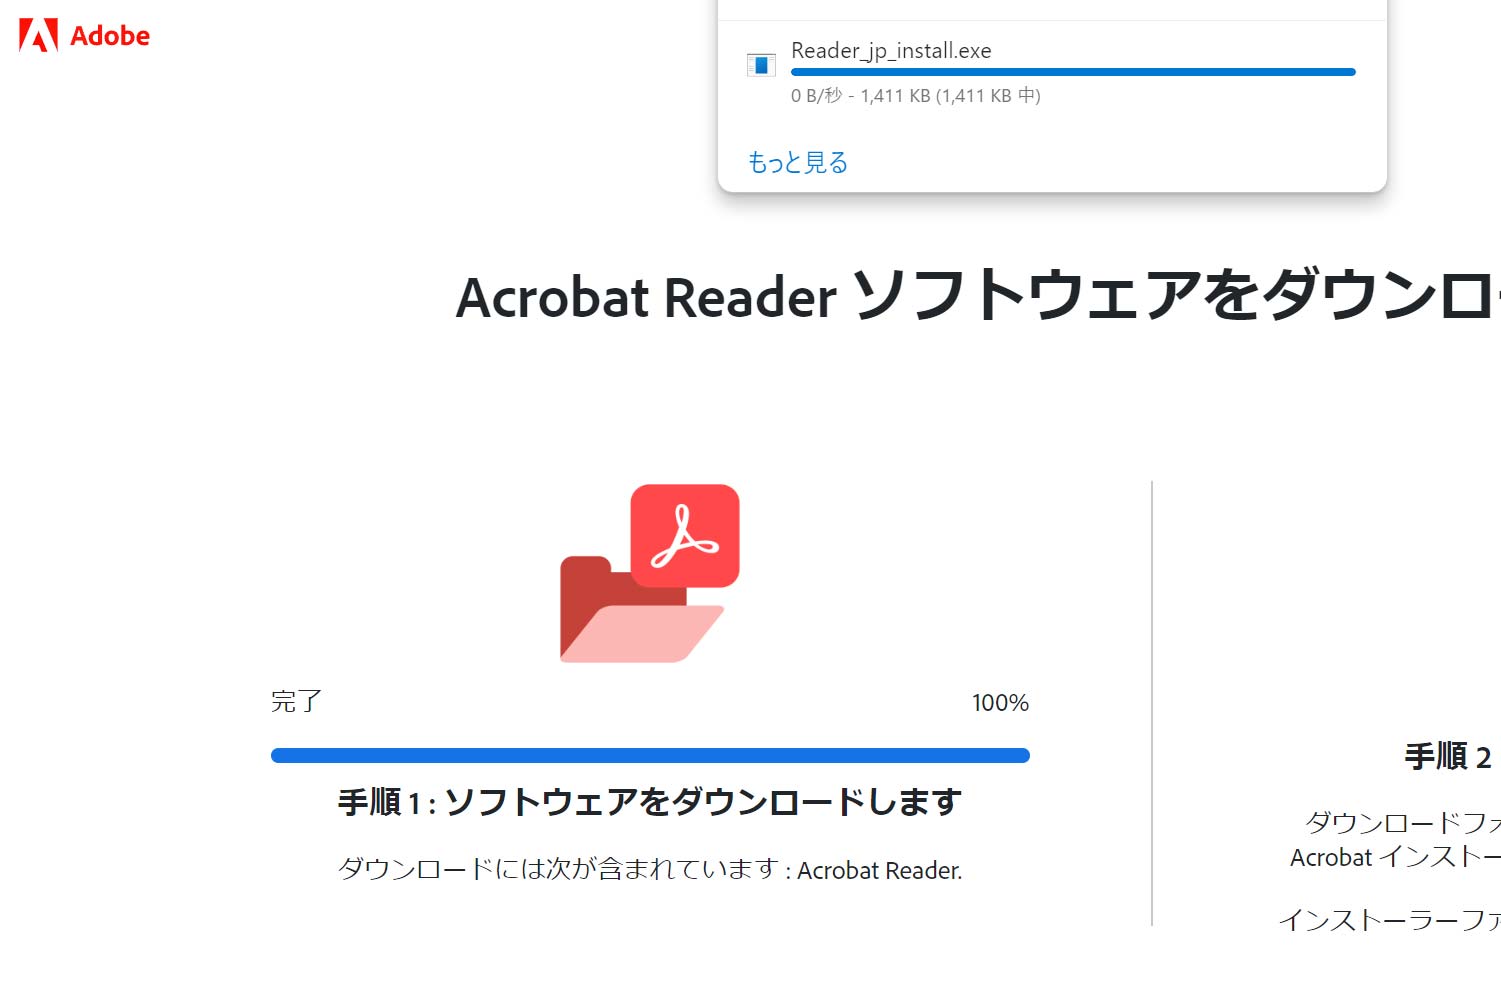 Adobe readerインストールプログラムダウンロード中